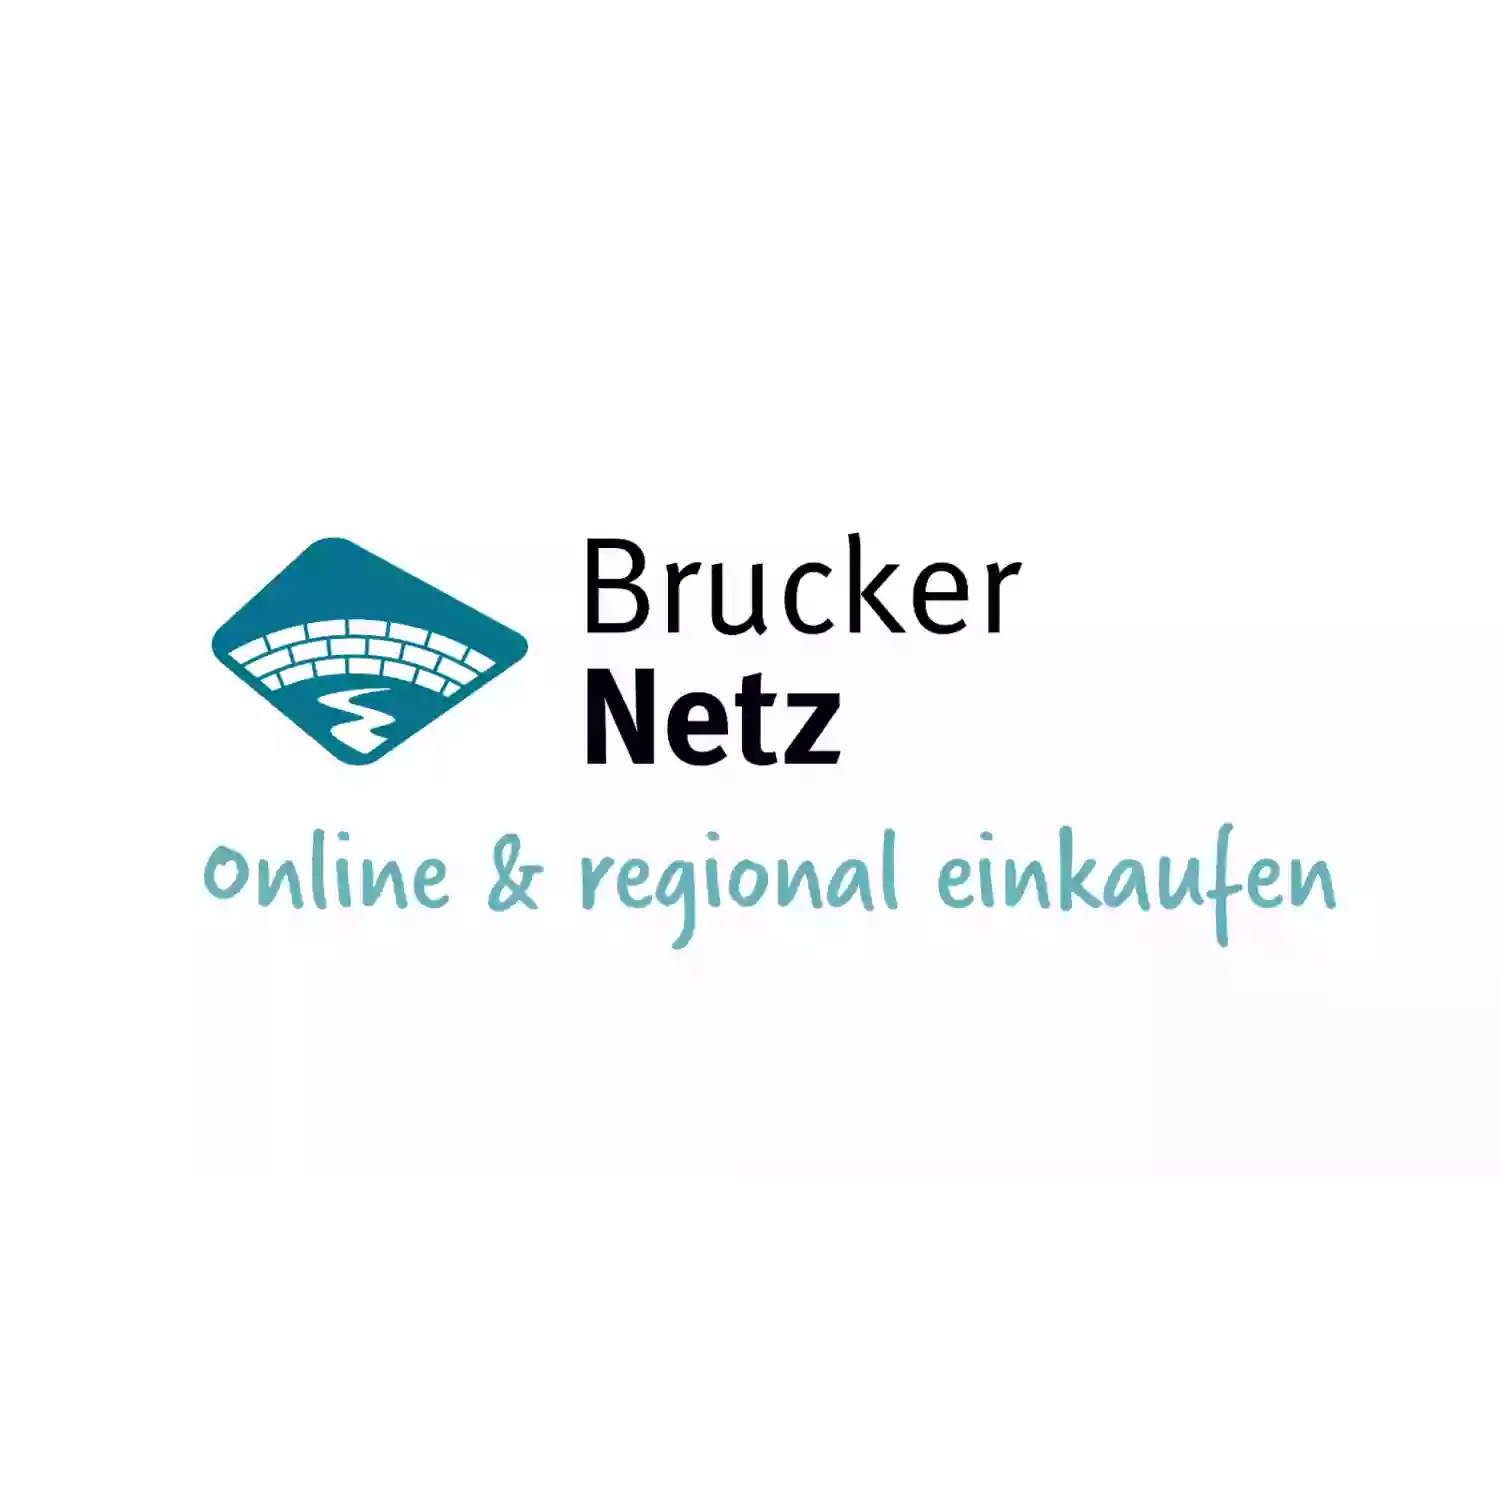 Brucker Netz